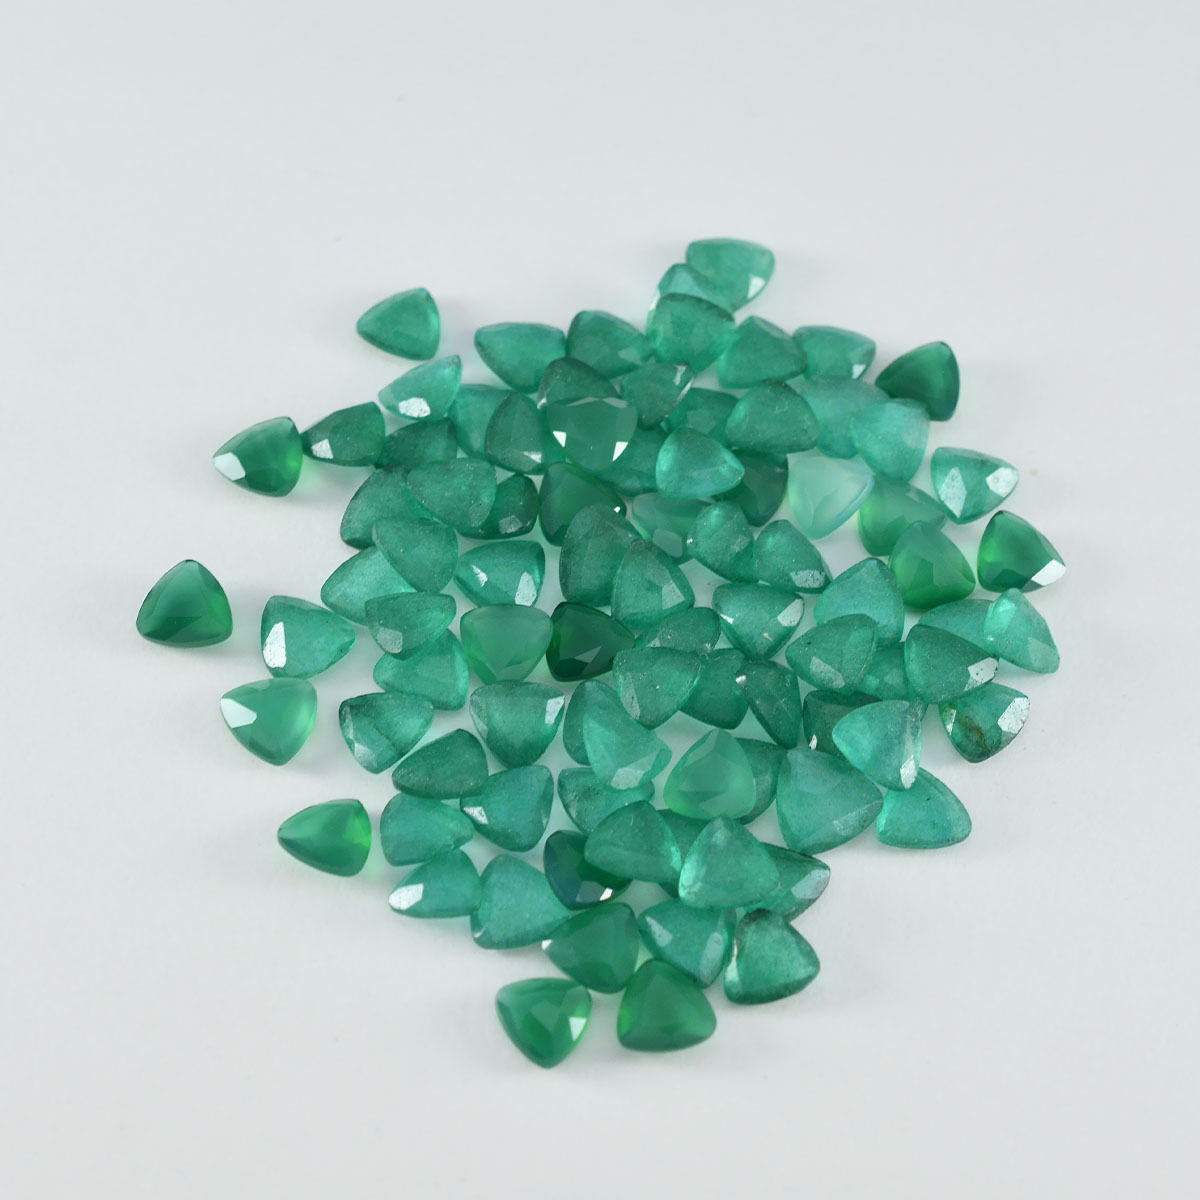 Riyogems 1PC Genuine Green Onyx Faceted 5x5 mm Trillion Shape great Quality Loose Stone